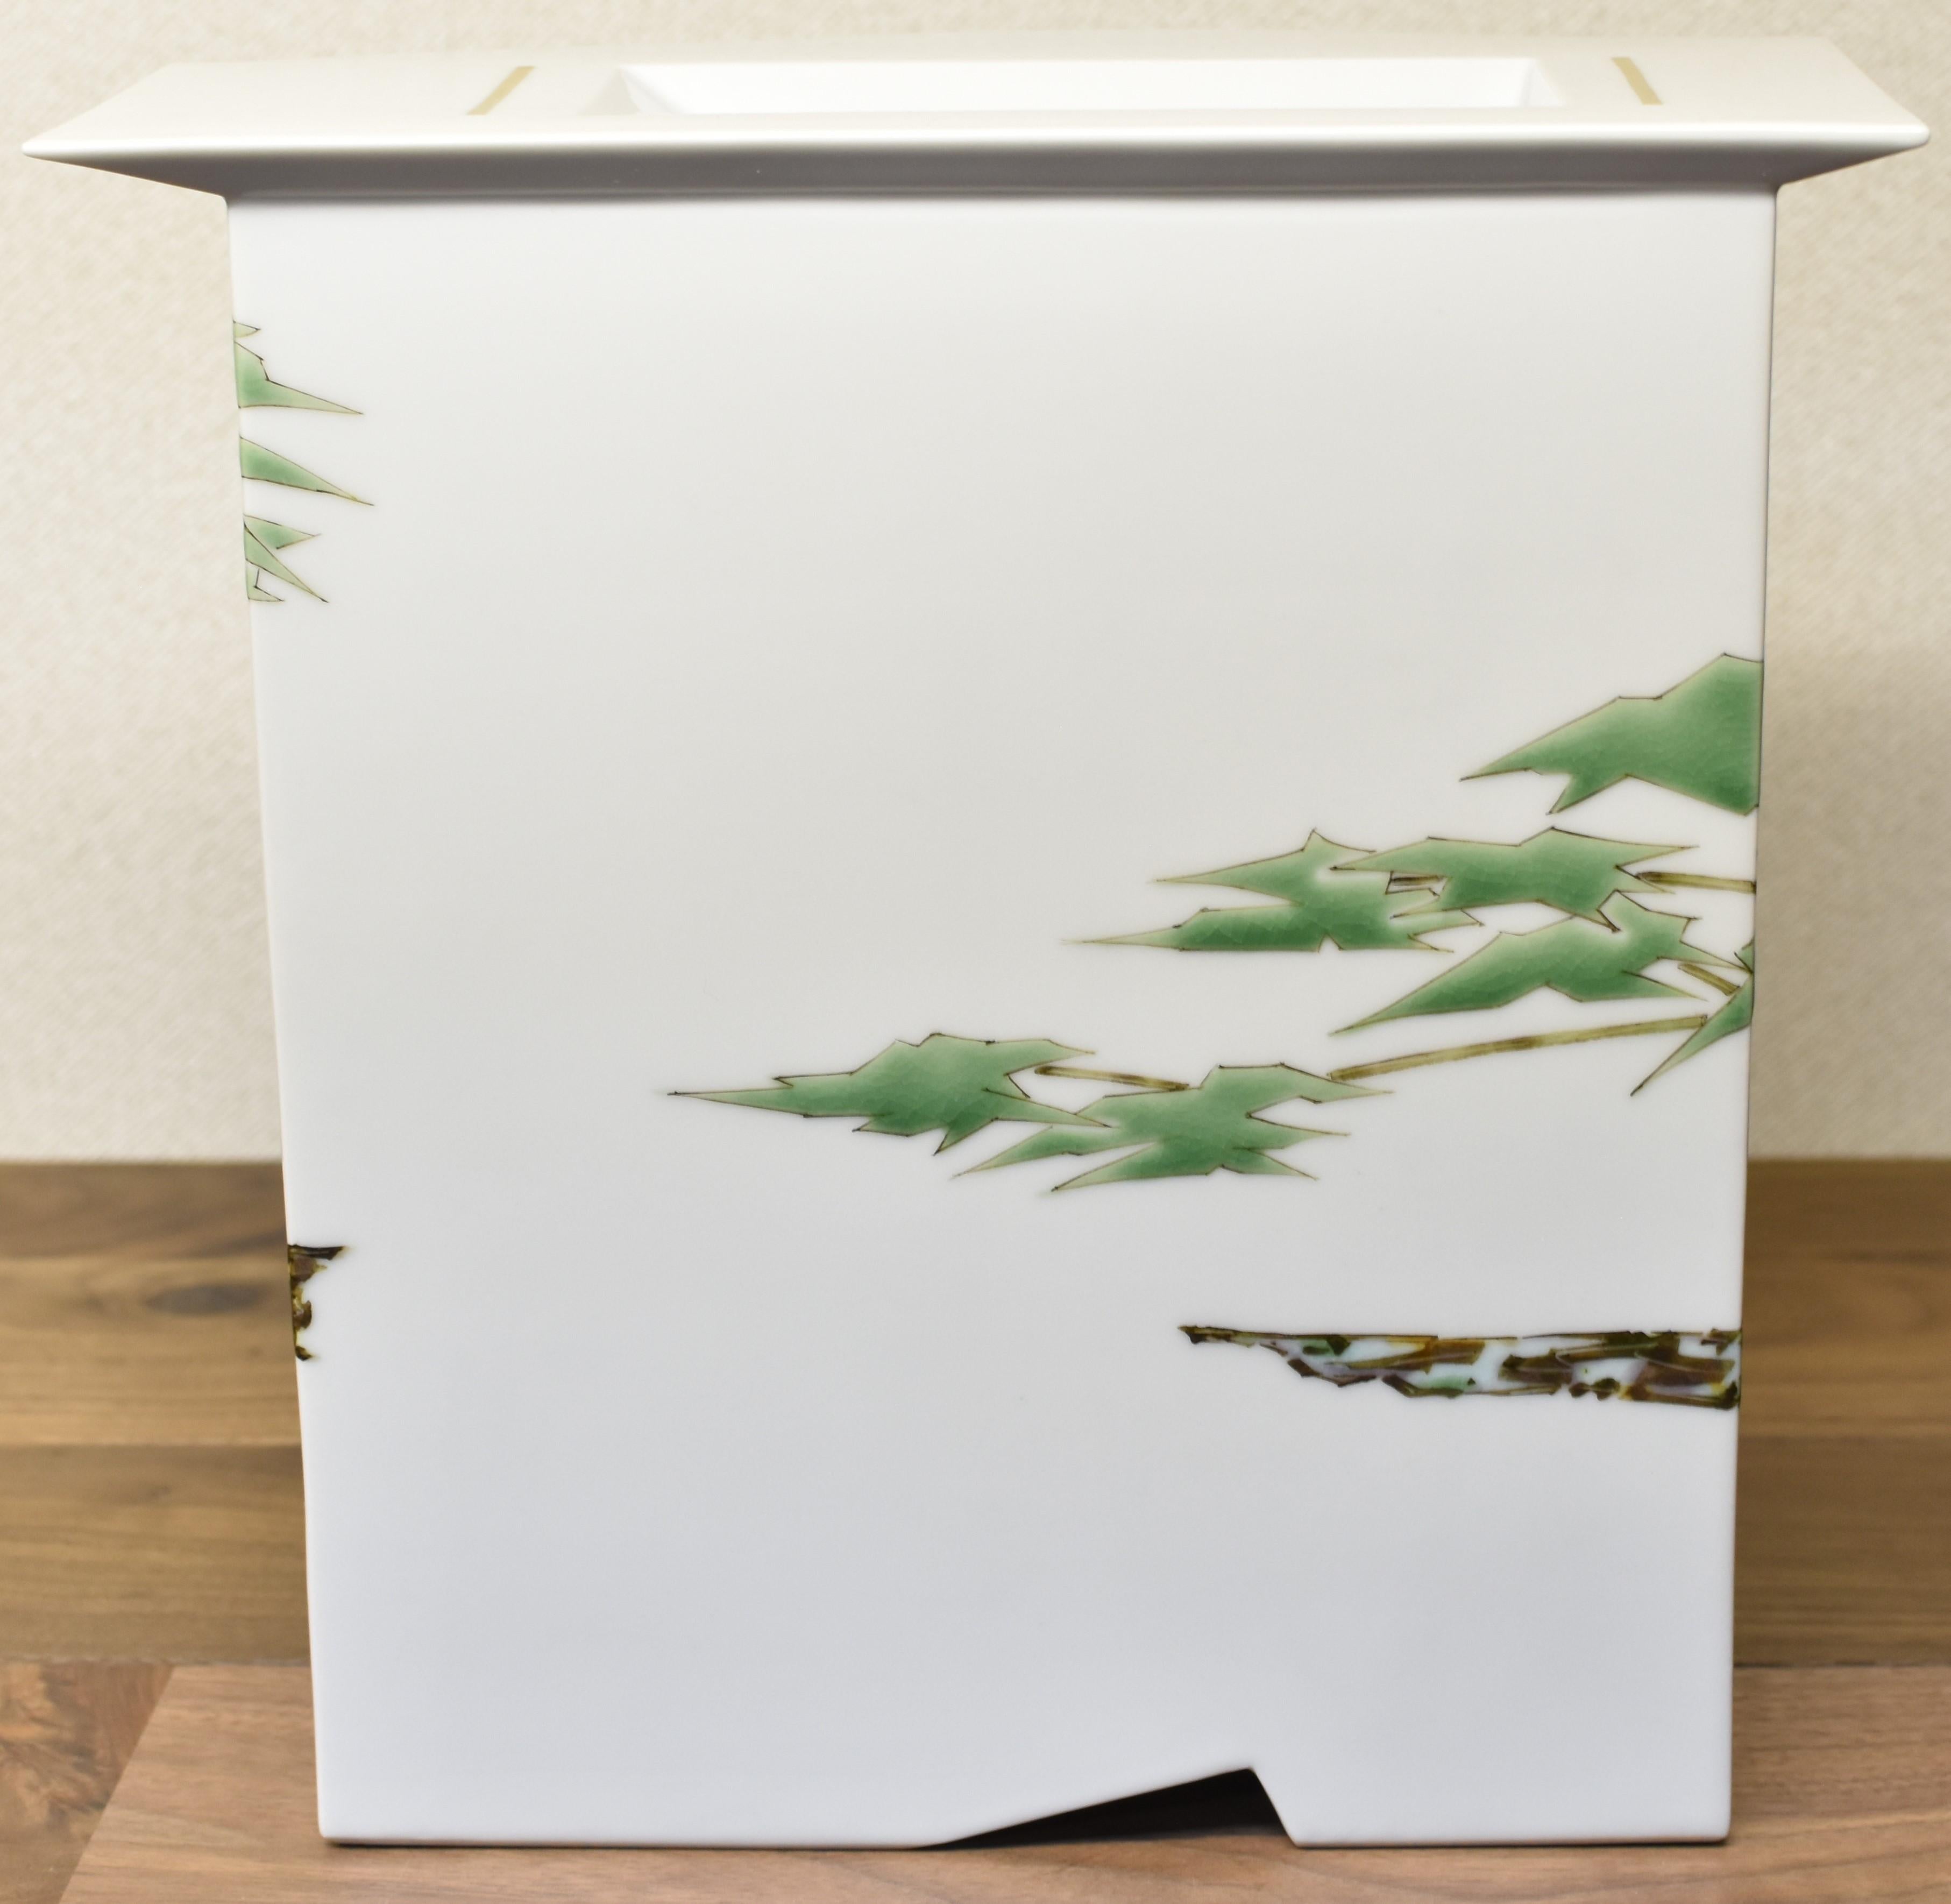 Japanese Contemporary Kutani Green Decorative Porcelain Vase by Master Artist